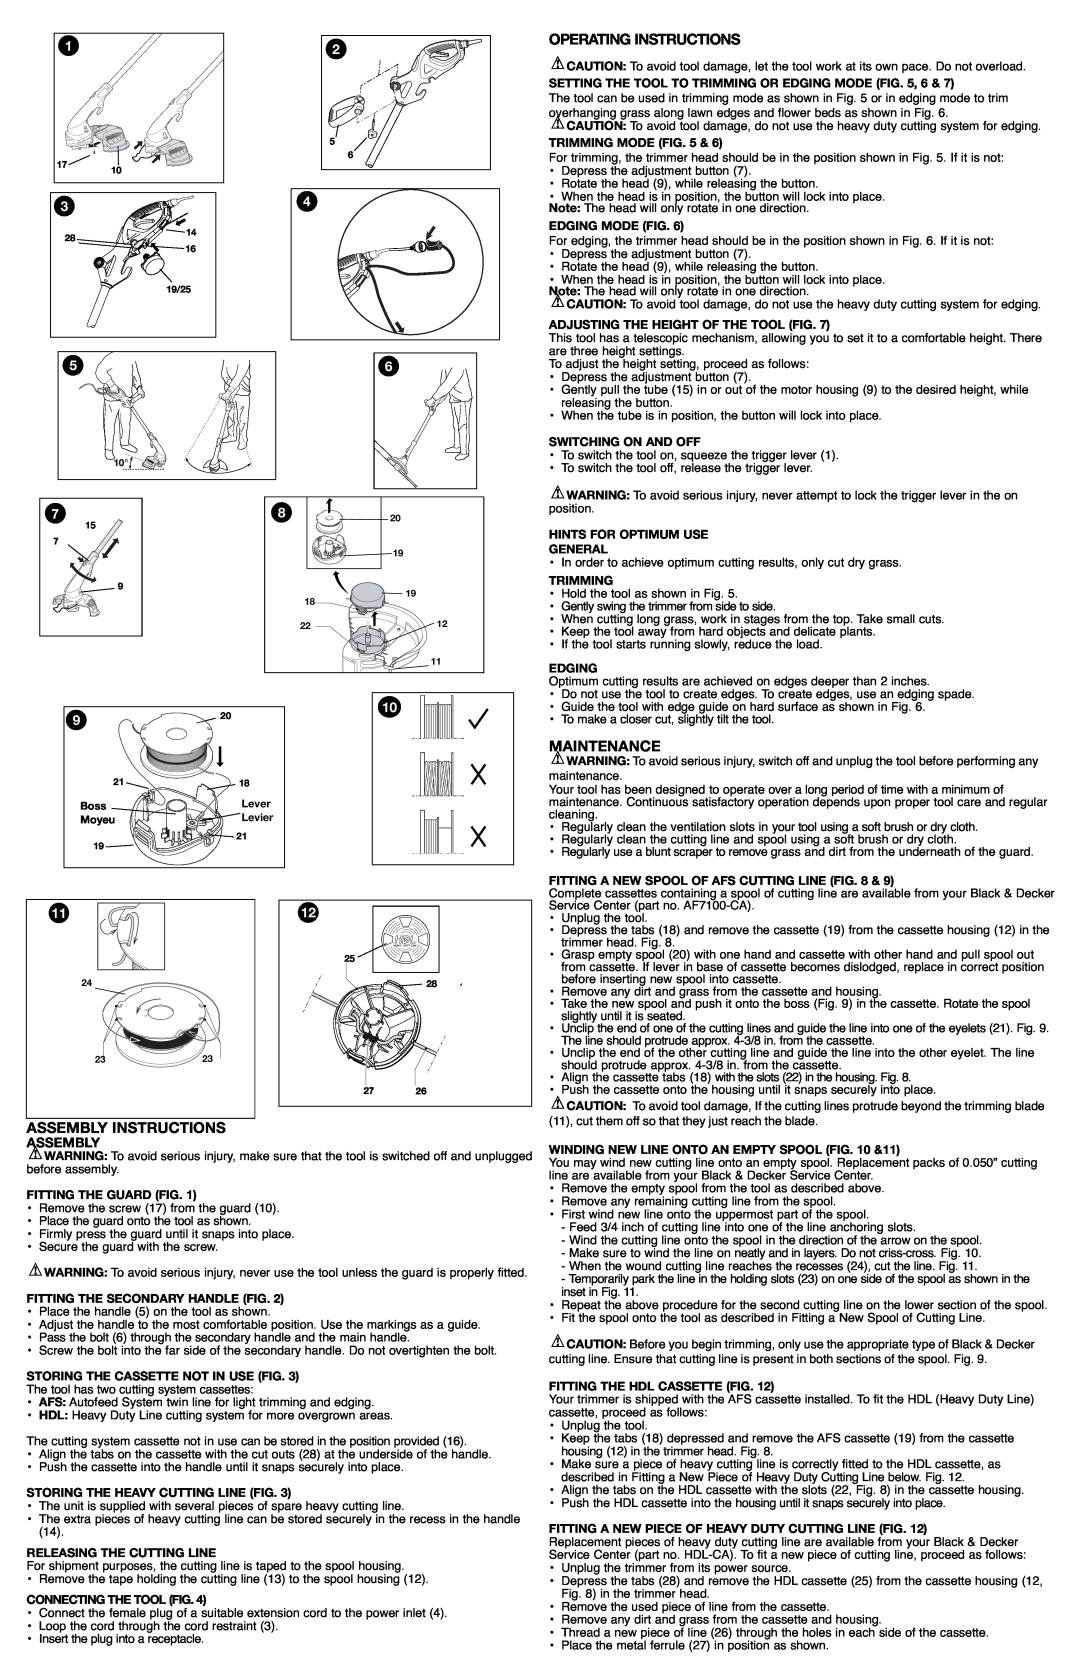 Cobra Electronics ST7100-CA instruction manual Operating Instructions, Maintenance, Assembly Instructions 